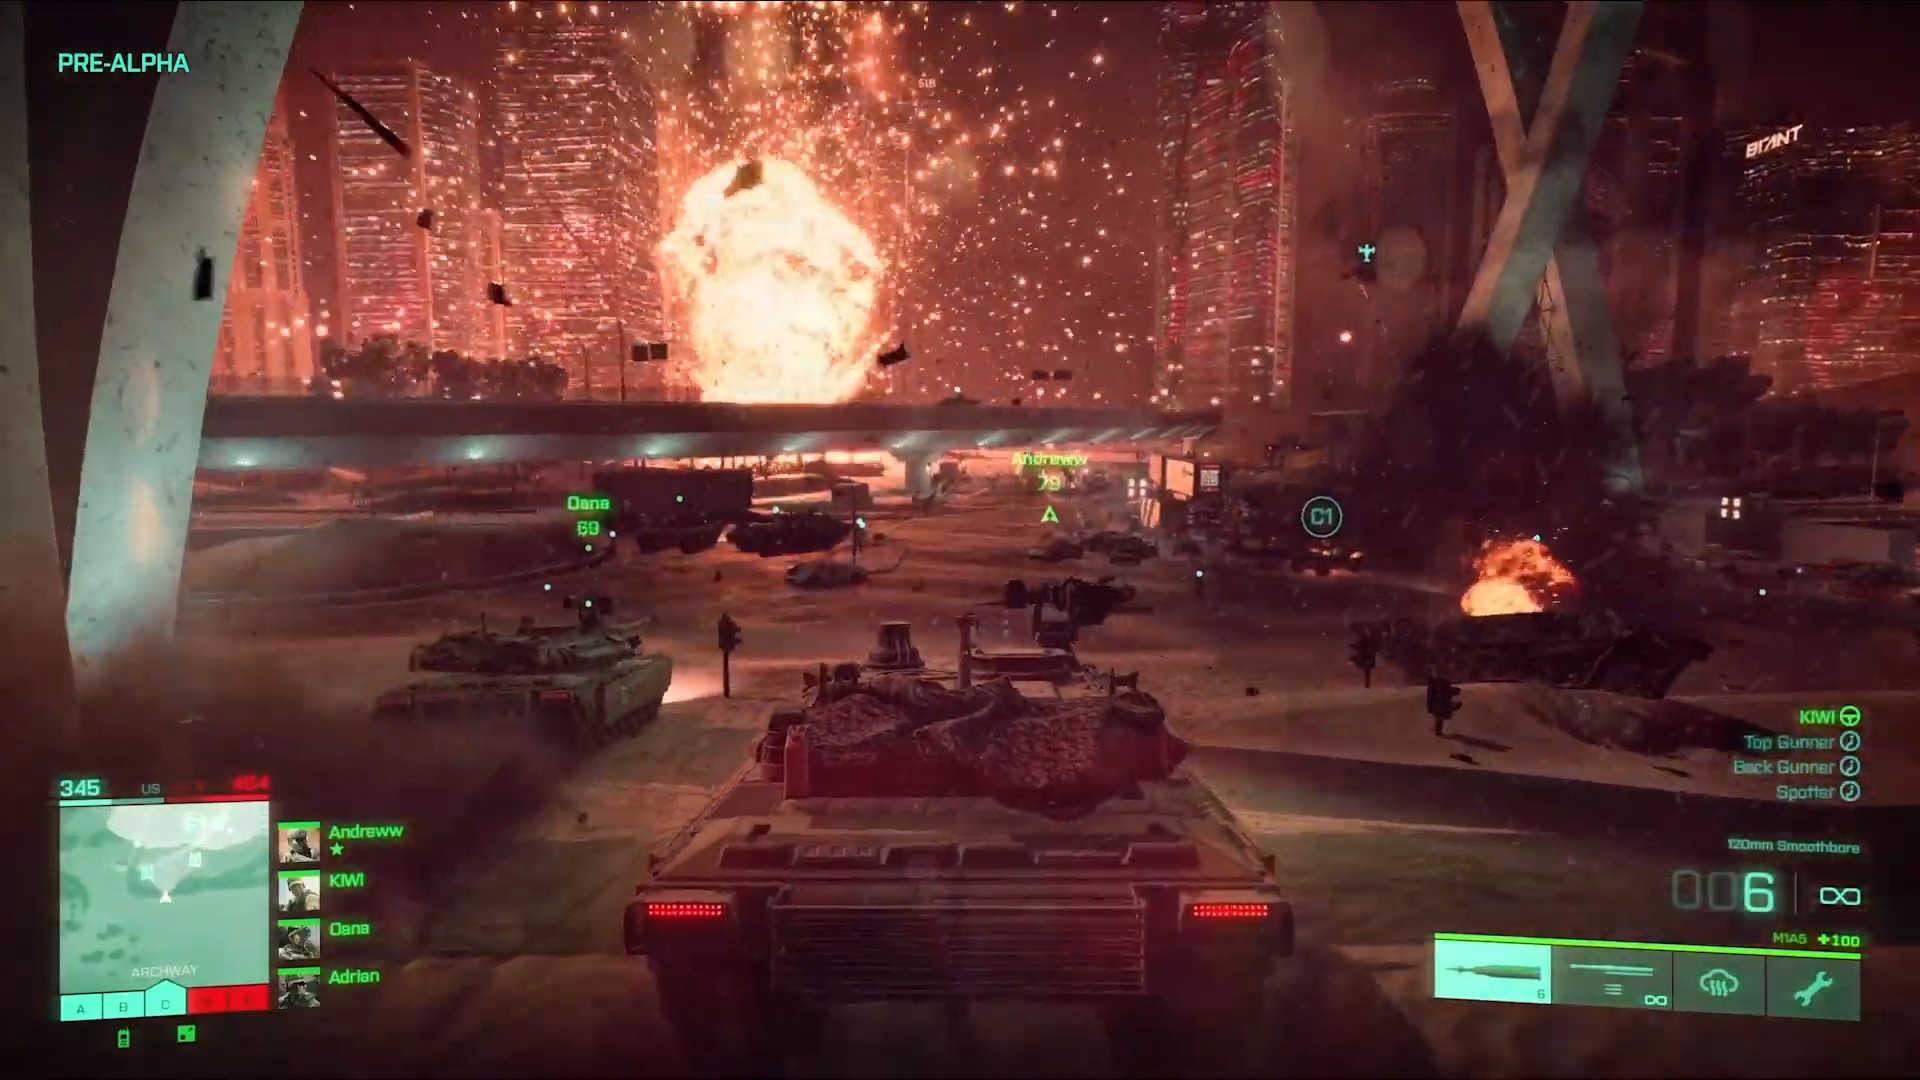 Battlefield 2042 gameplay trailer shows sandstorm, grappling, gun mods